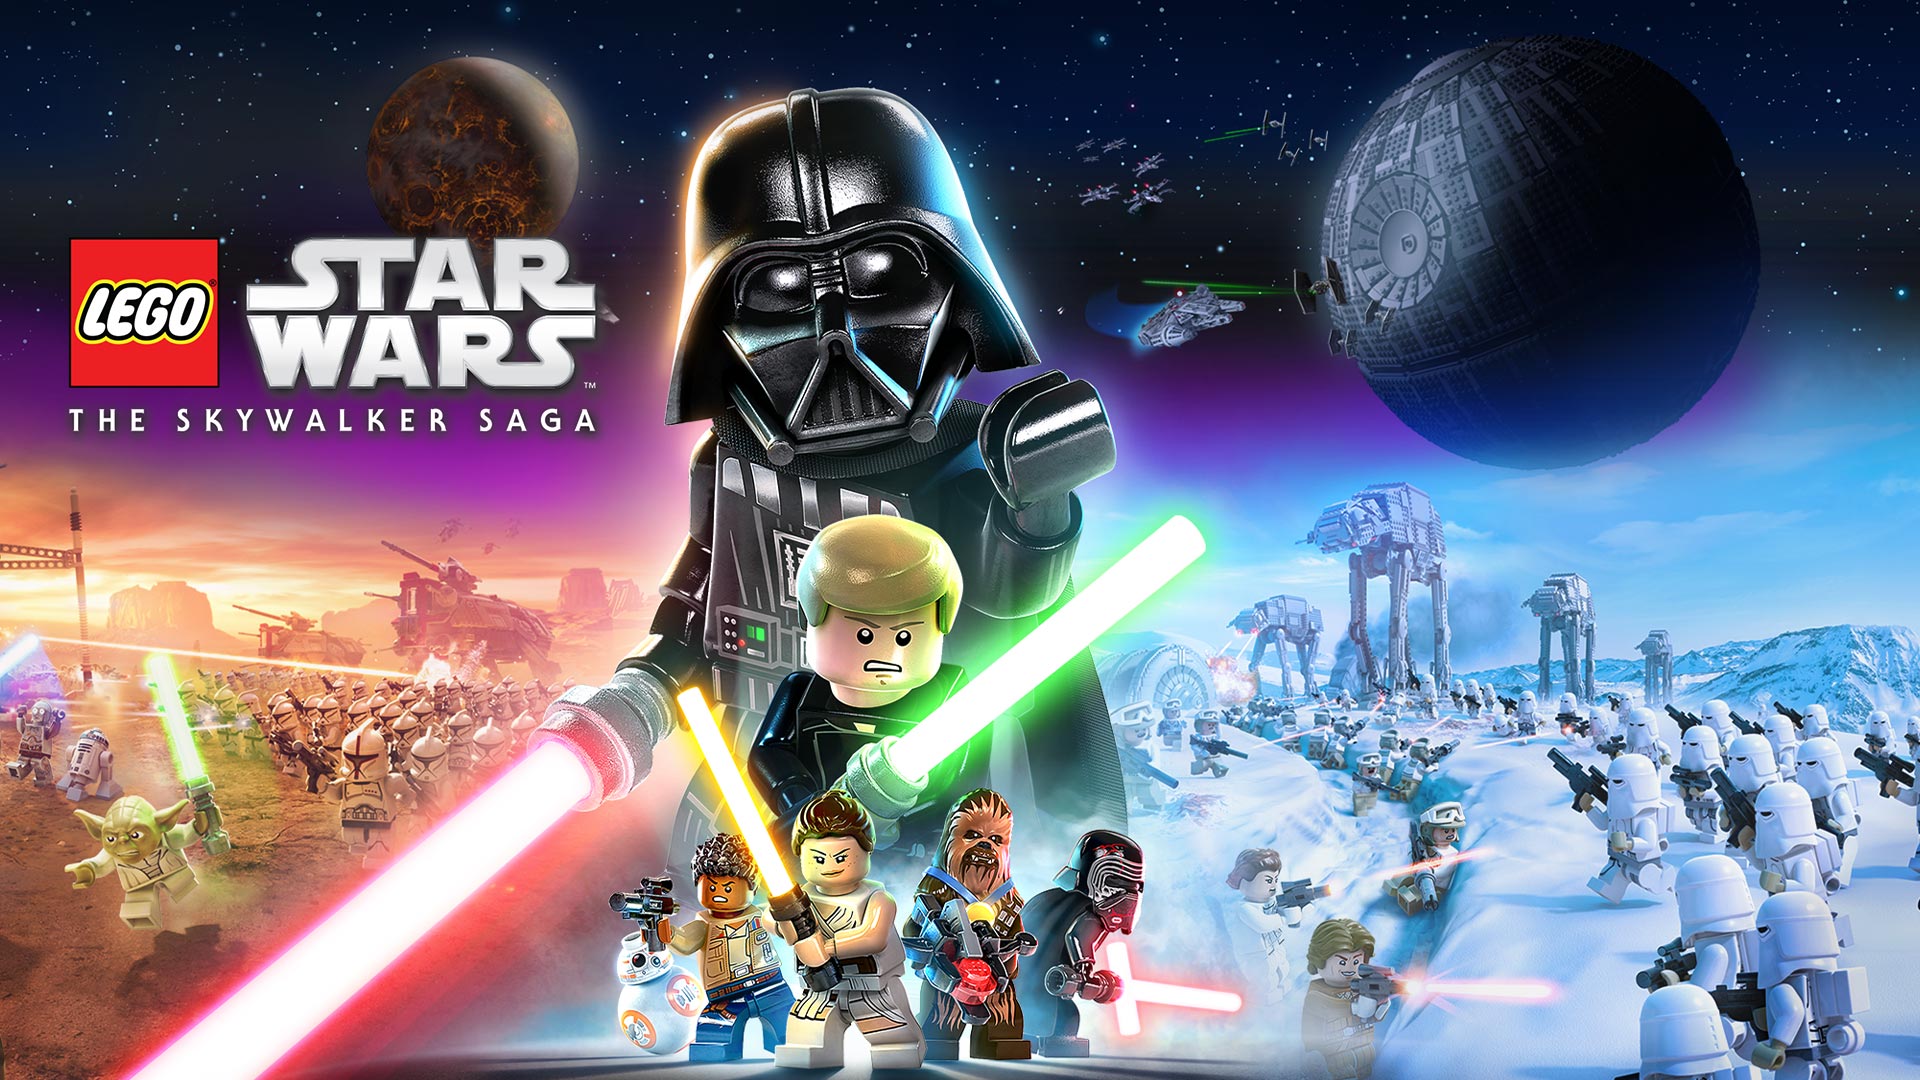 LEGO Starwars The Skywalker Saga, коллаж из персонажей с космическими сражениями на заднем плане. 